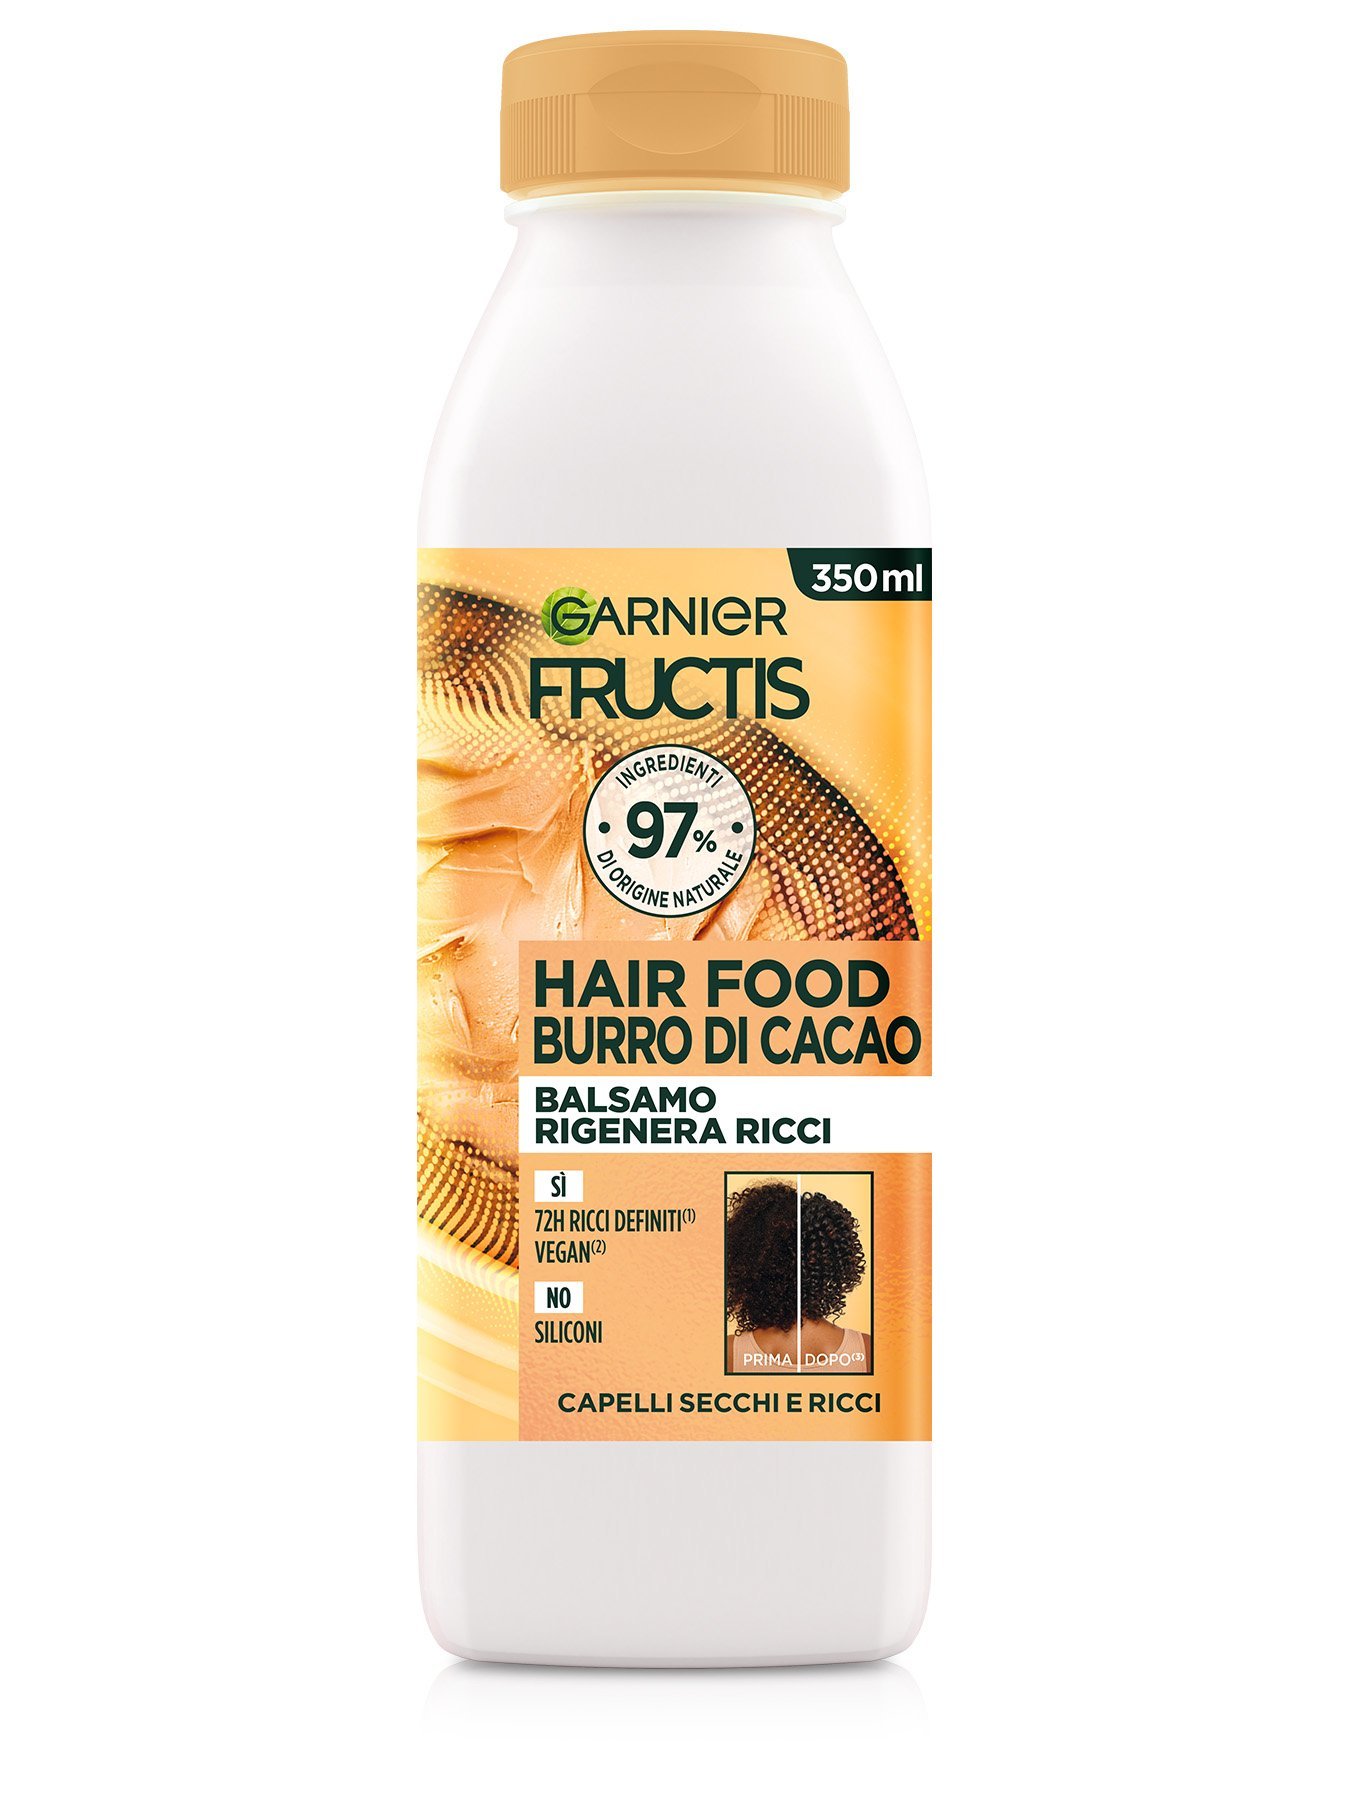 Fructis Hair Food Cacao Balsamo